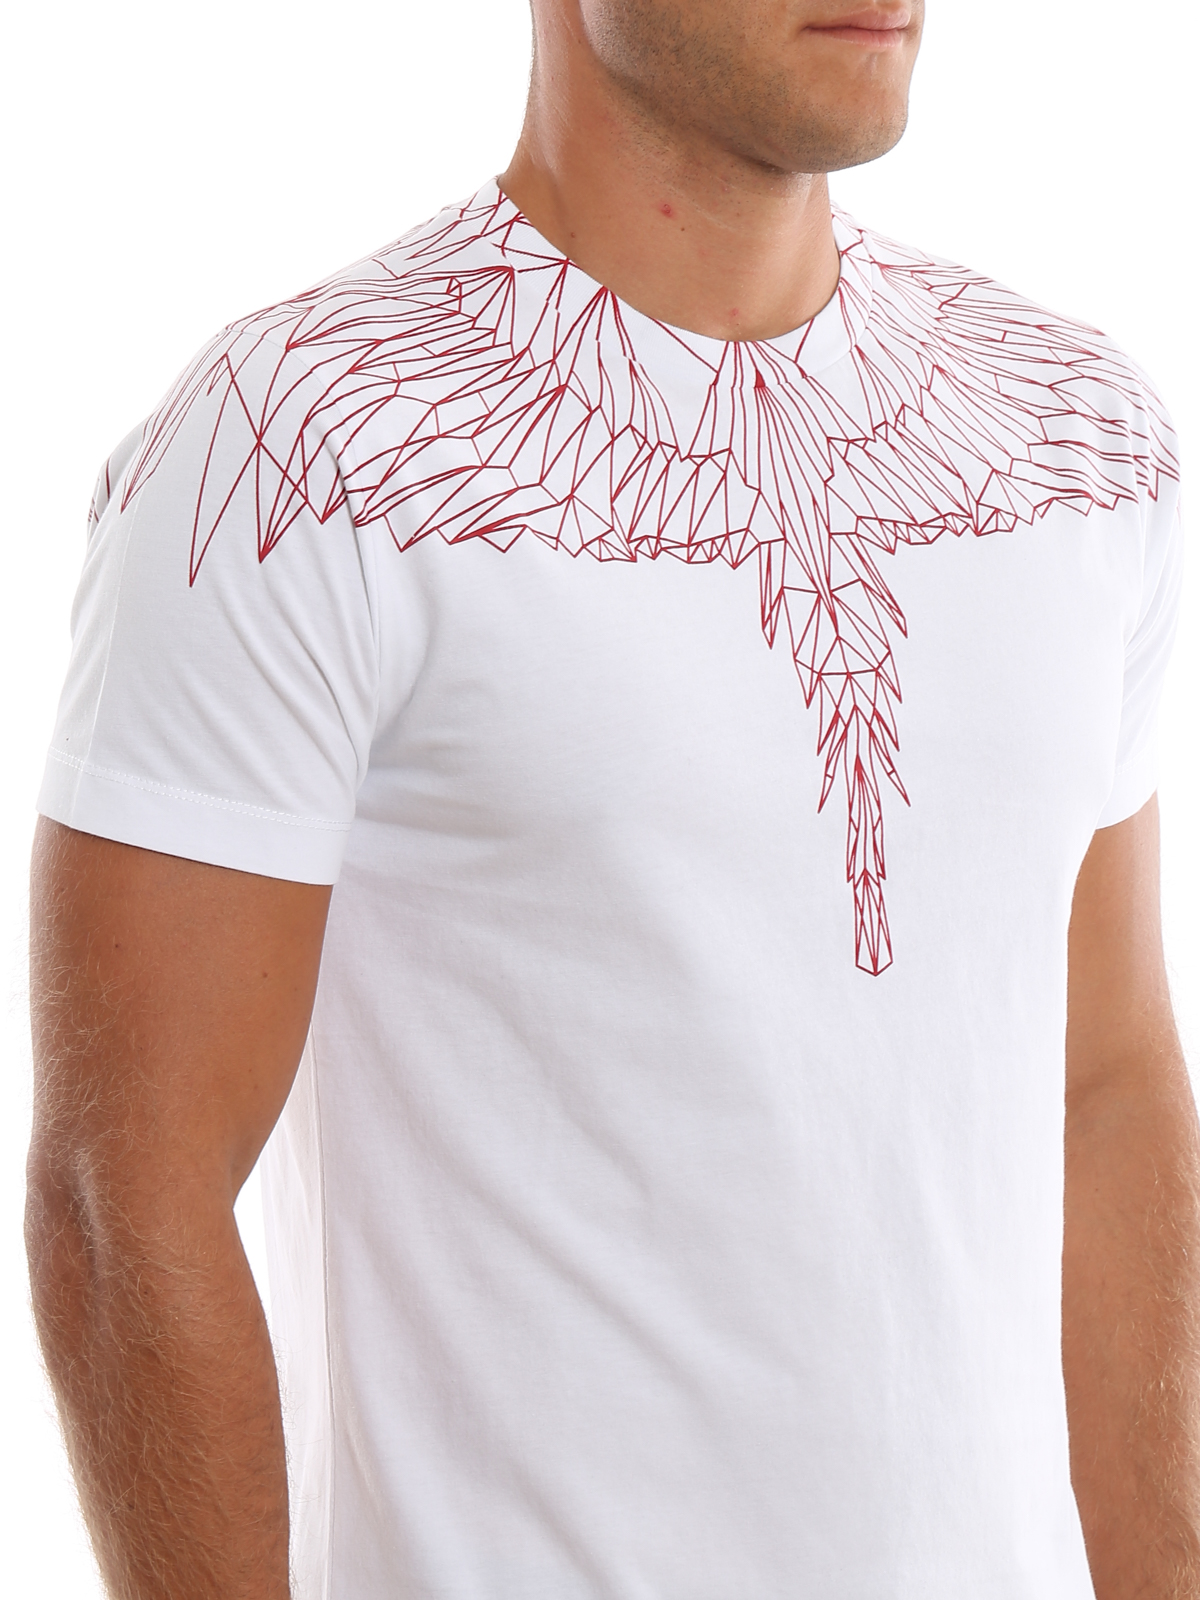 T-shirts Marcelo Burlon - Red Wings white T-shirt CMAA018F190010960120